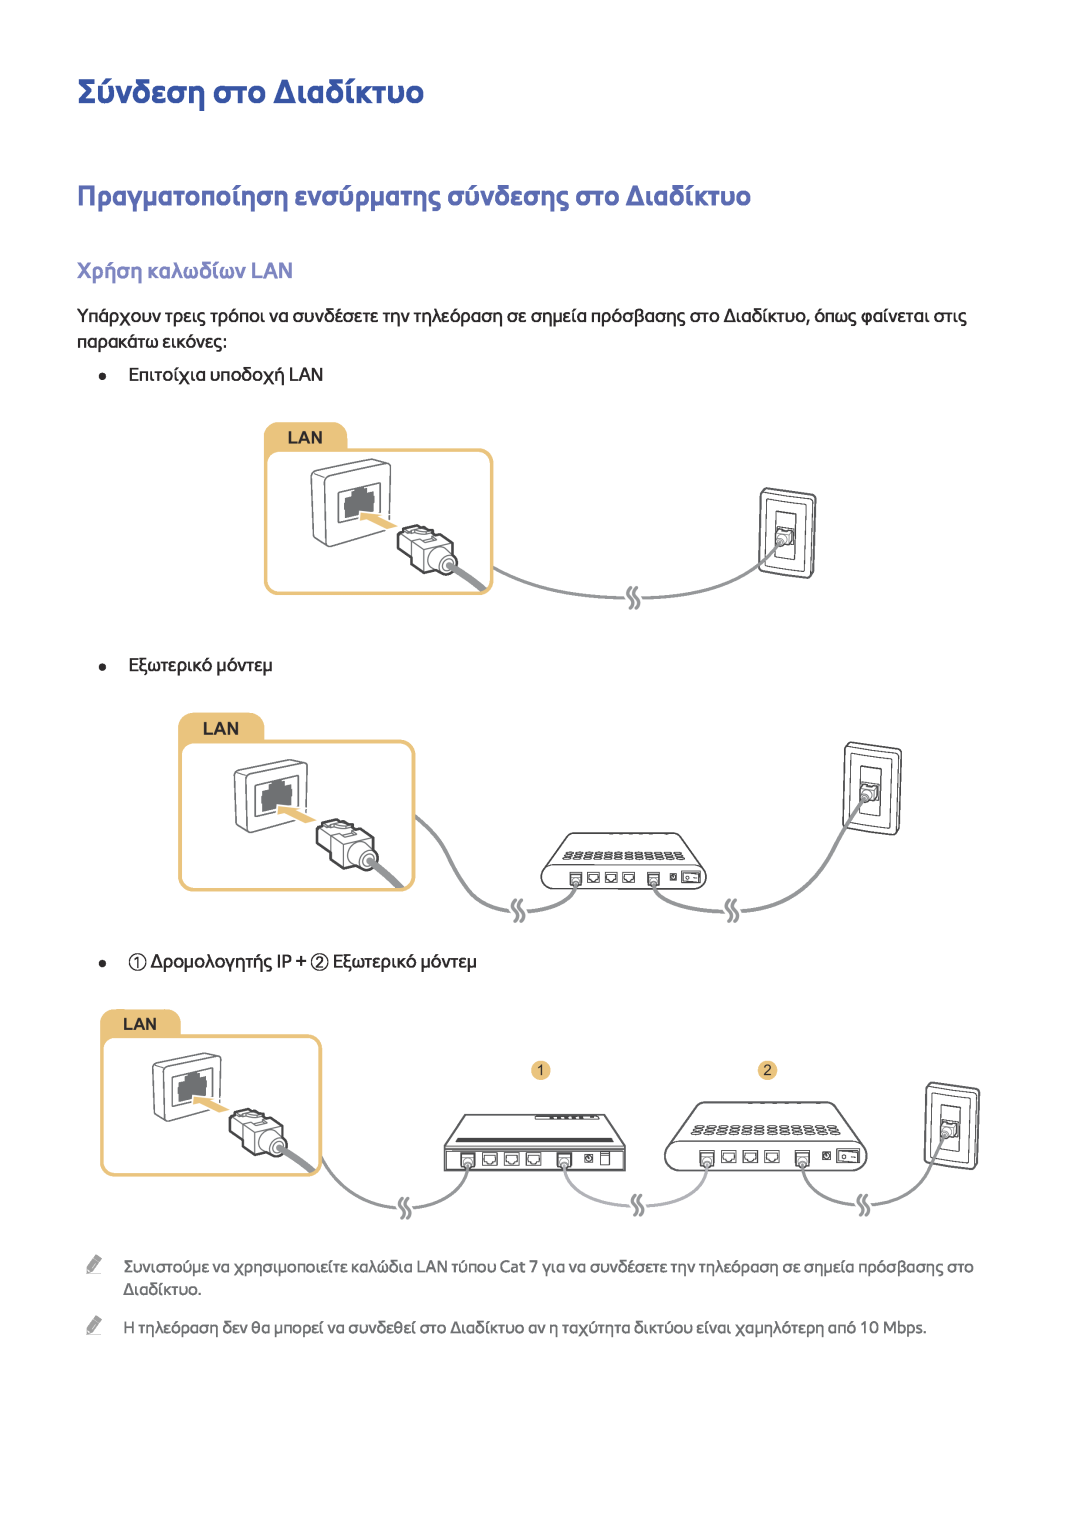 Samsung UE50J6200AWXXH manual Σύνδεση στο Διαδίκτυο, Πραγματοποίηση ενσύρματης σύνδεσης στο Διαδίκτυο, Χρήση καλωδίων LAN 